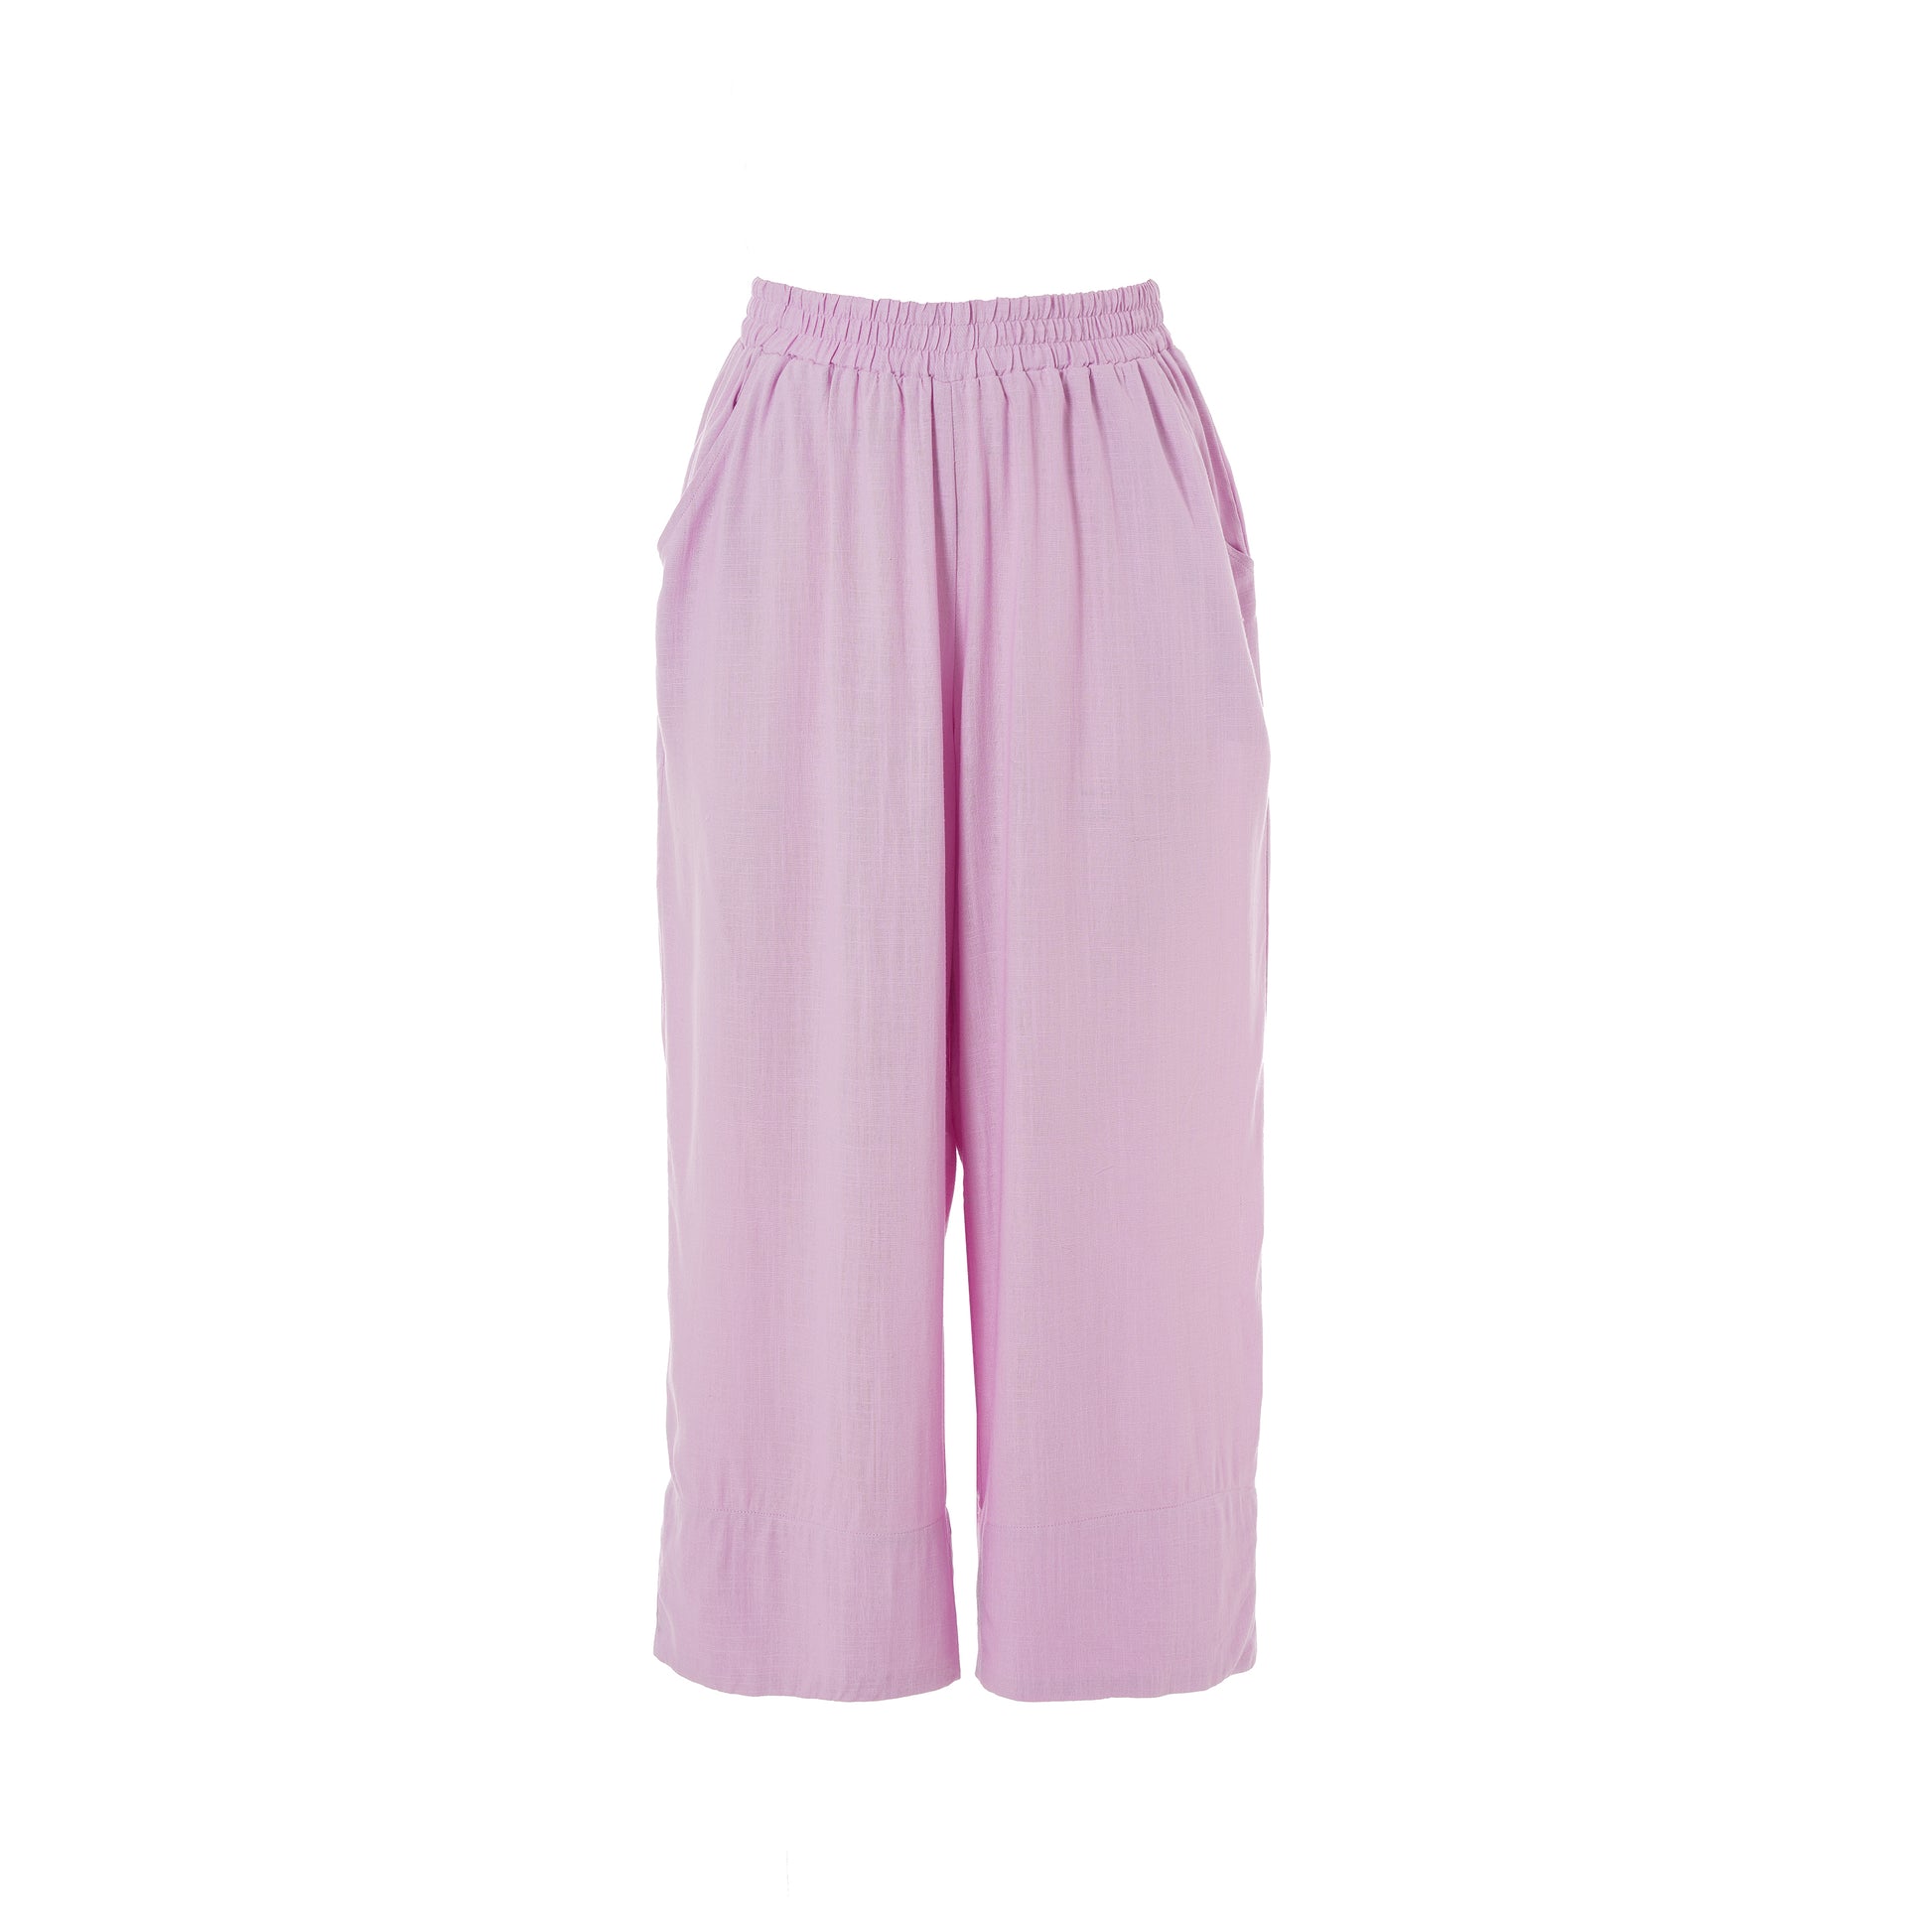 Gozzip Woman Karina Loose 3/4 pants - FLERE FARVER 3/4 Loose Pant Pink Lavendel